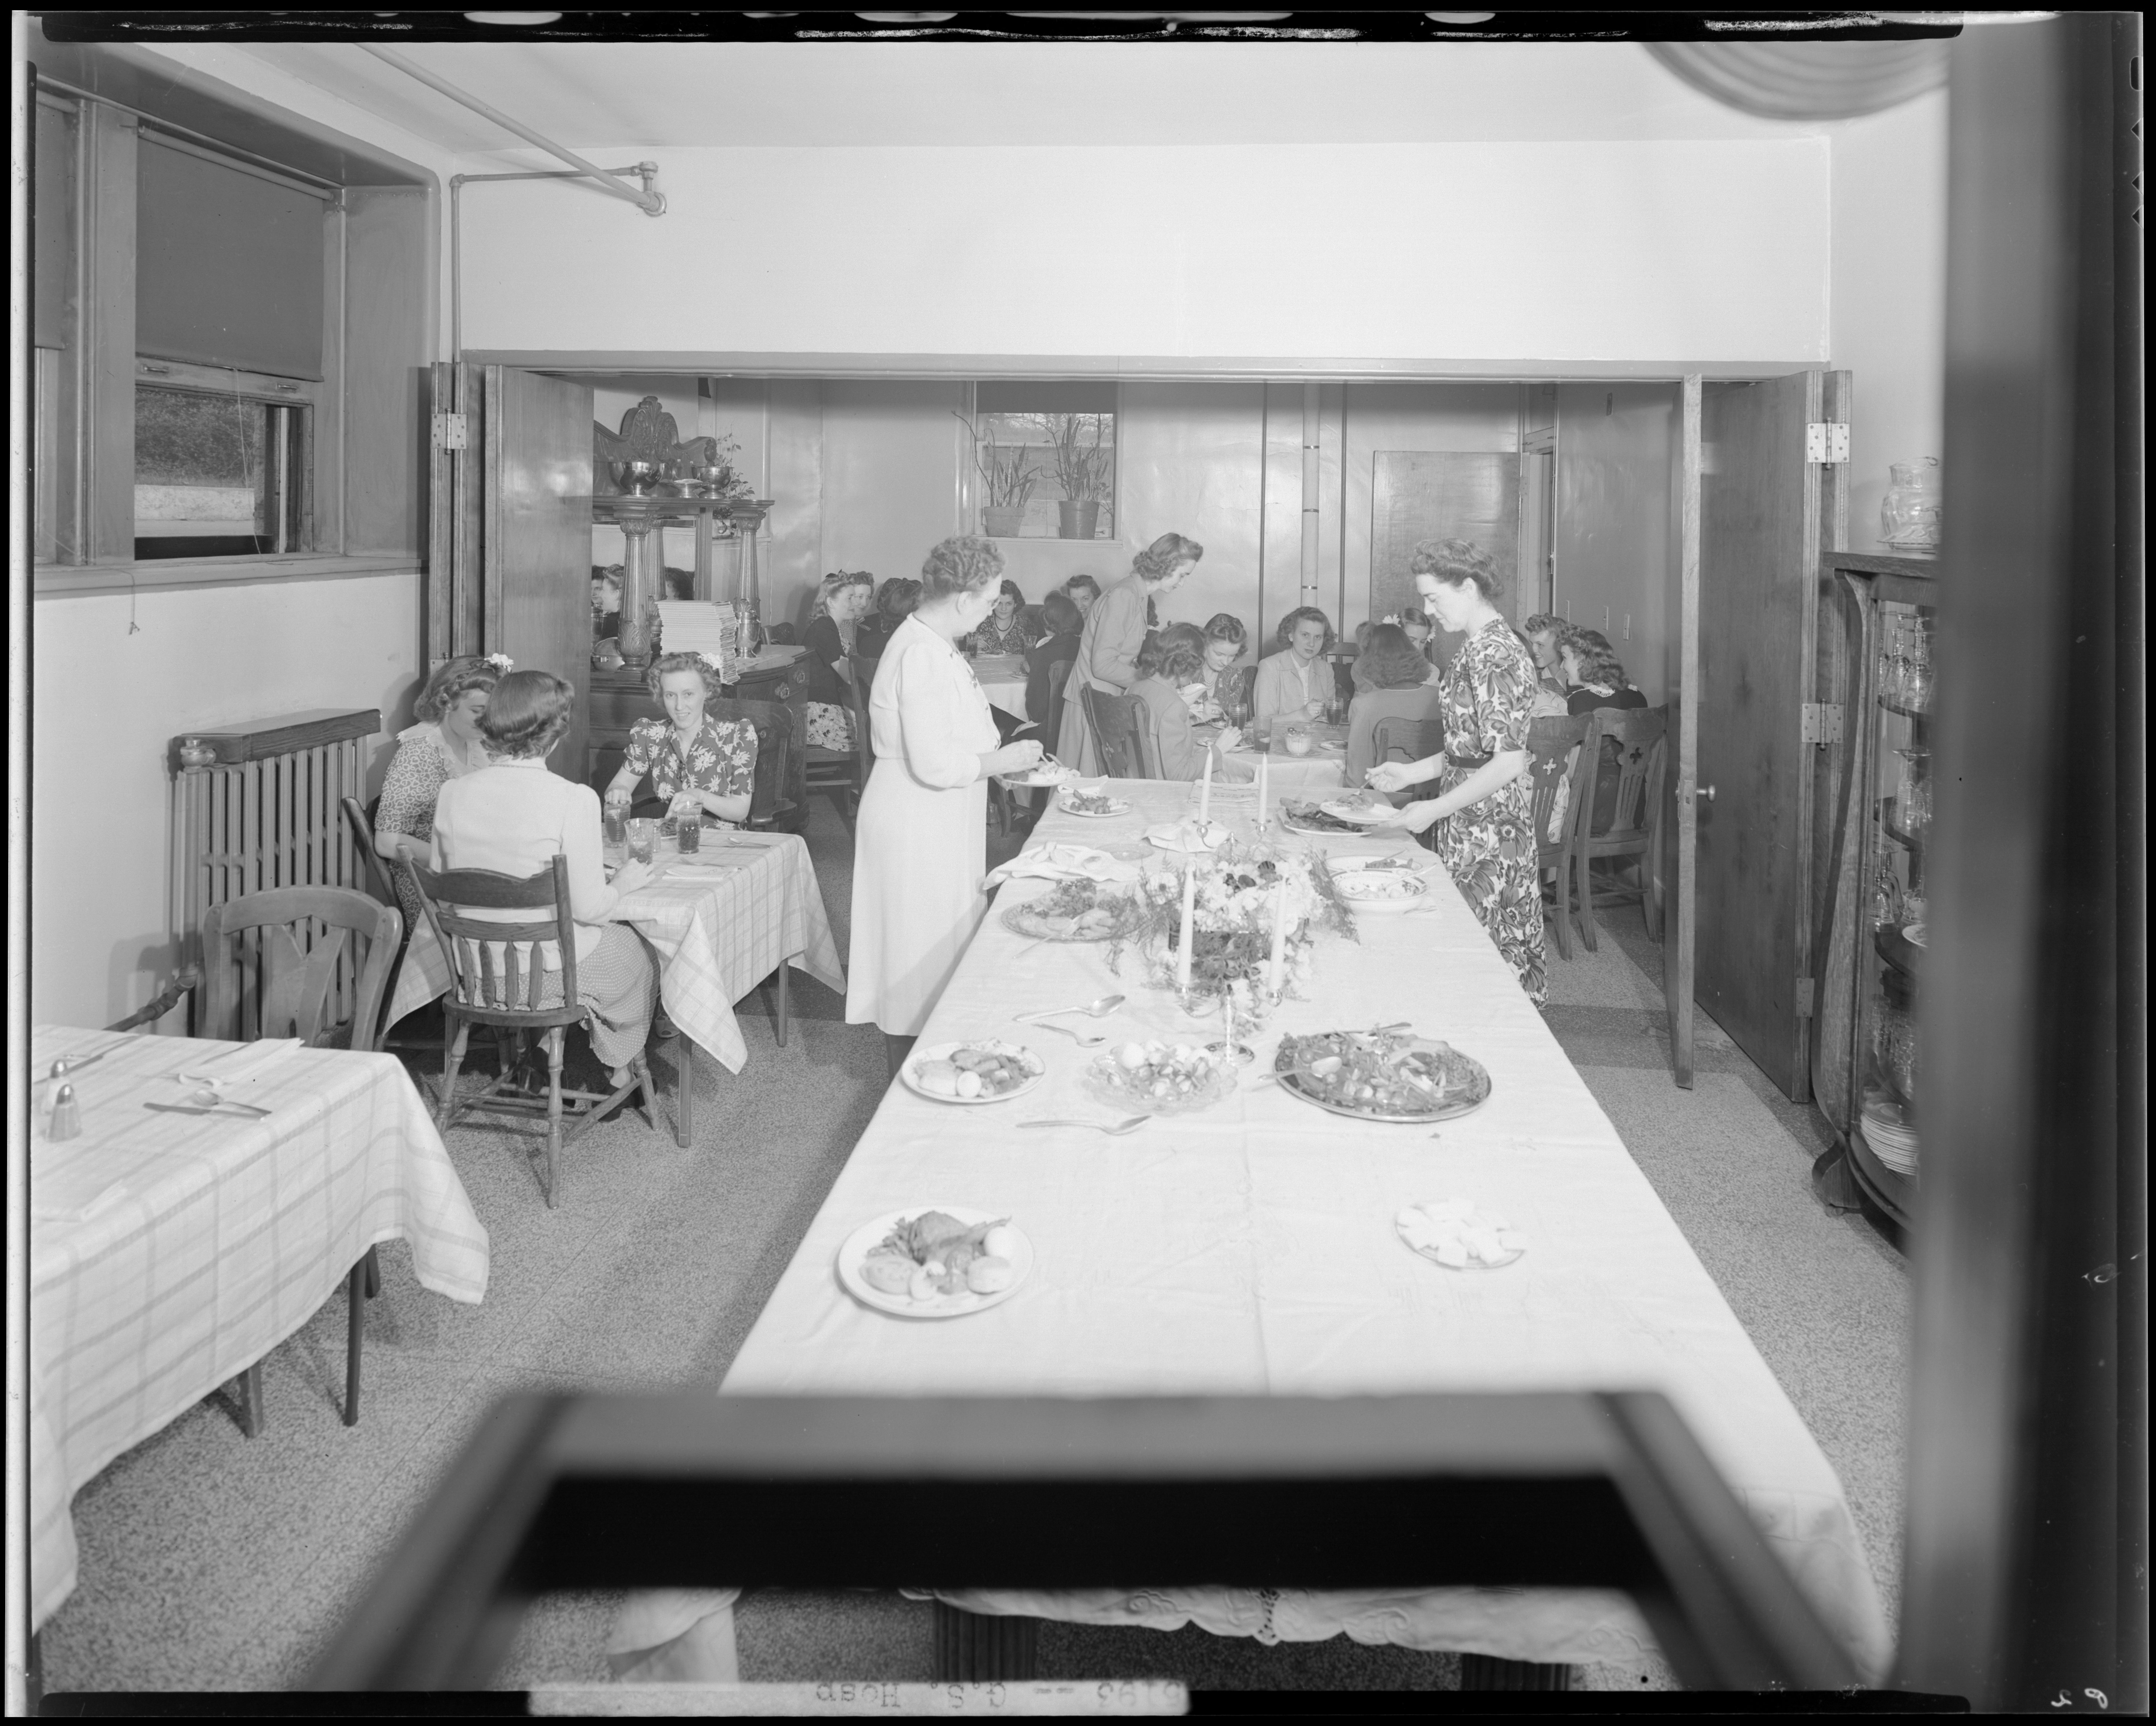 Good Samaritan Hospital, 310-330 South Limestone; group gathered in room